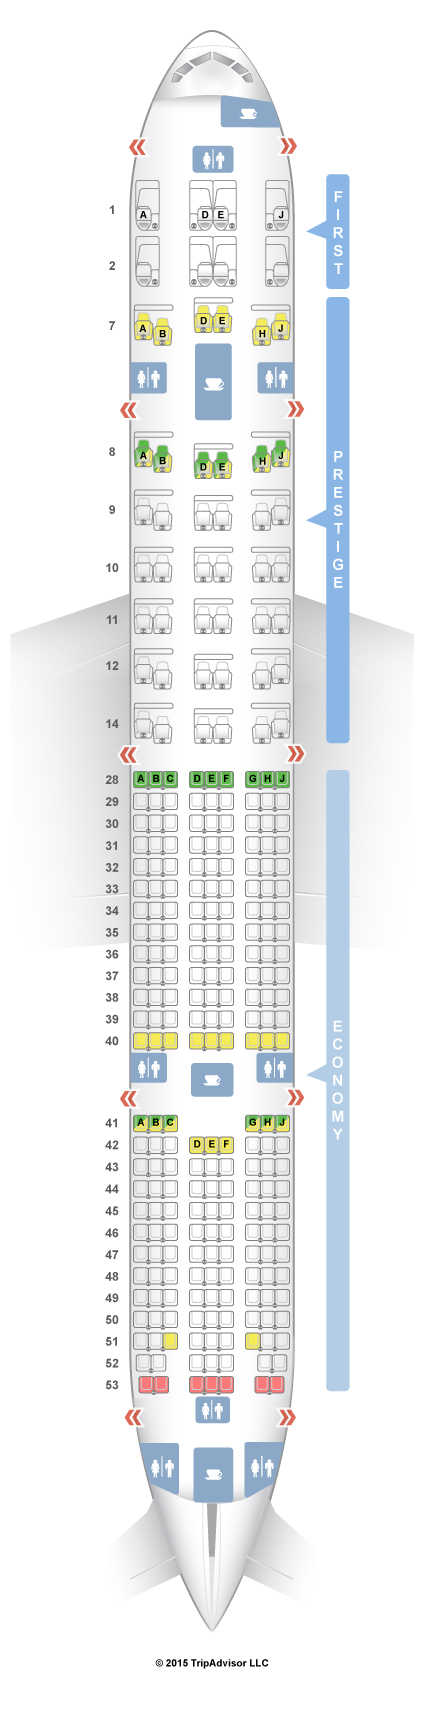 Emirates Boeing 777 300er Seating Chart